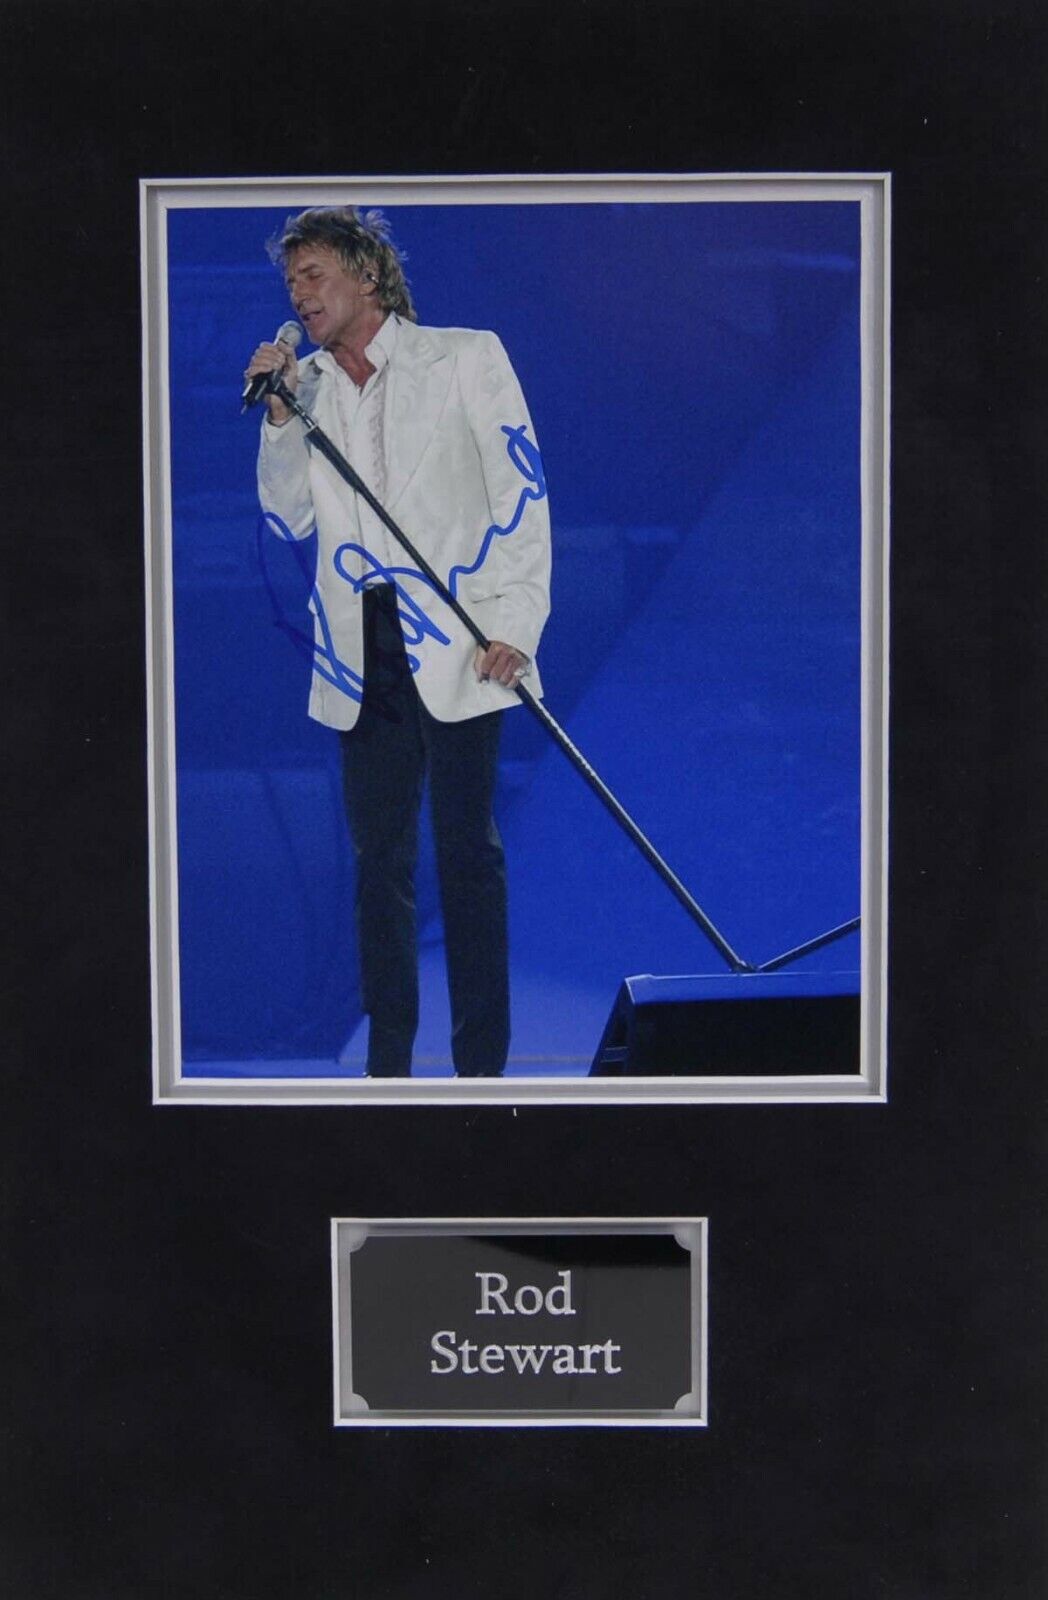 Rod STEWART Signed & Mounted 10x8 Photo Poster painting AFTAL COA British Rock Singer Legend